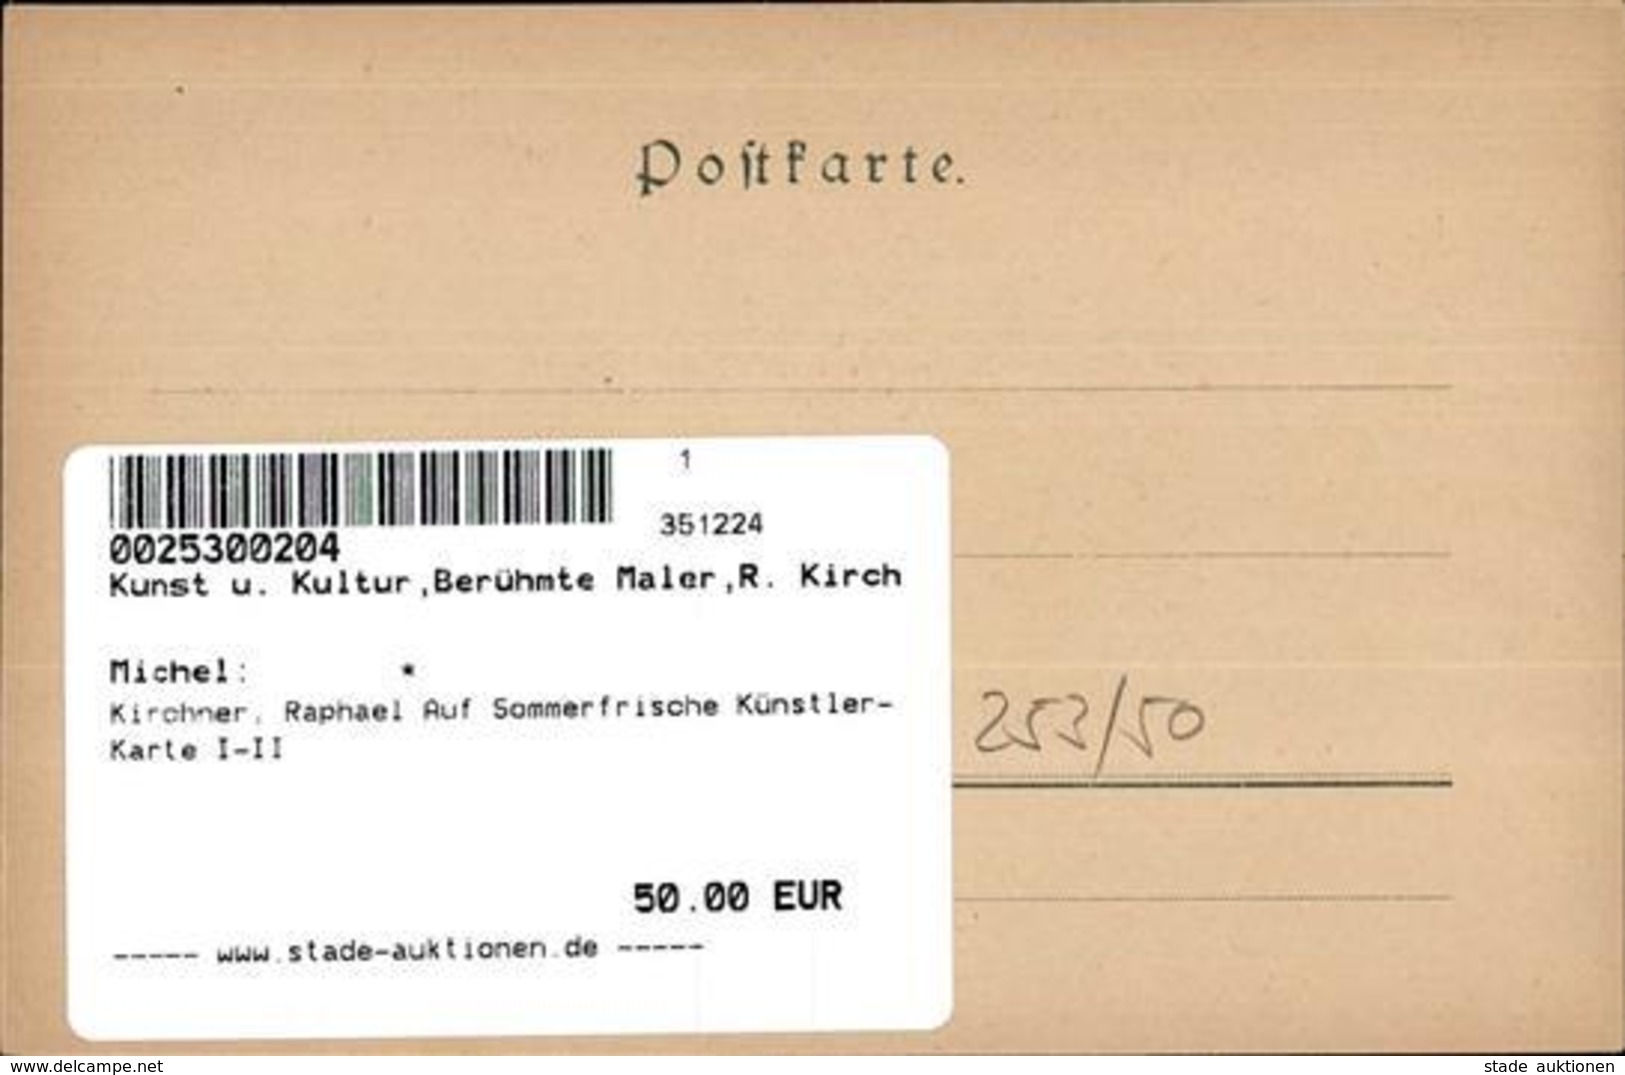 Kirchner, Raphael Auf Sommerfrische Künstler-Karte I-II - Kirchner, Raphael